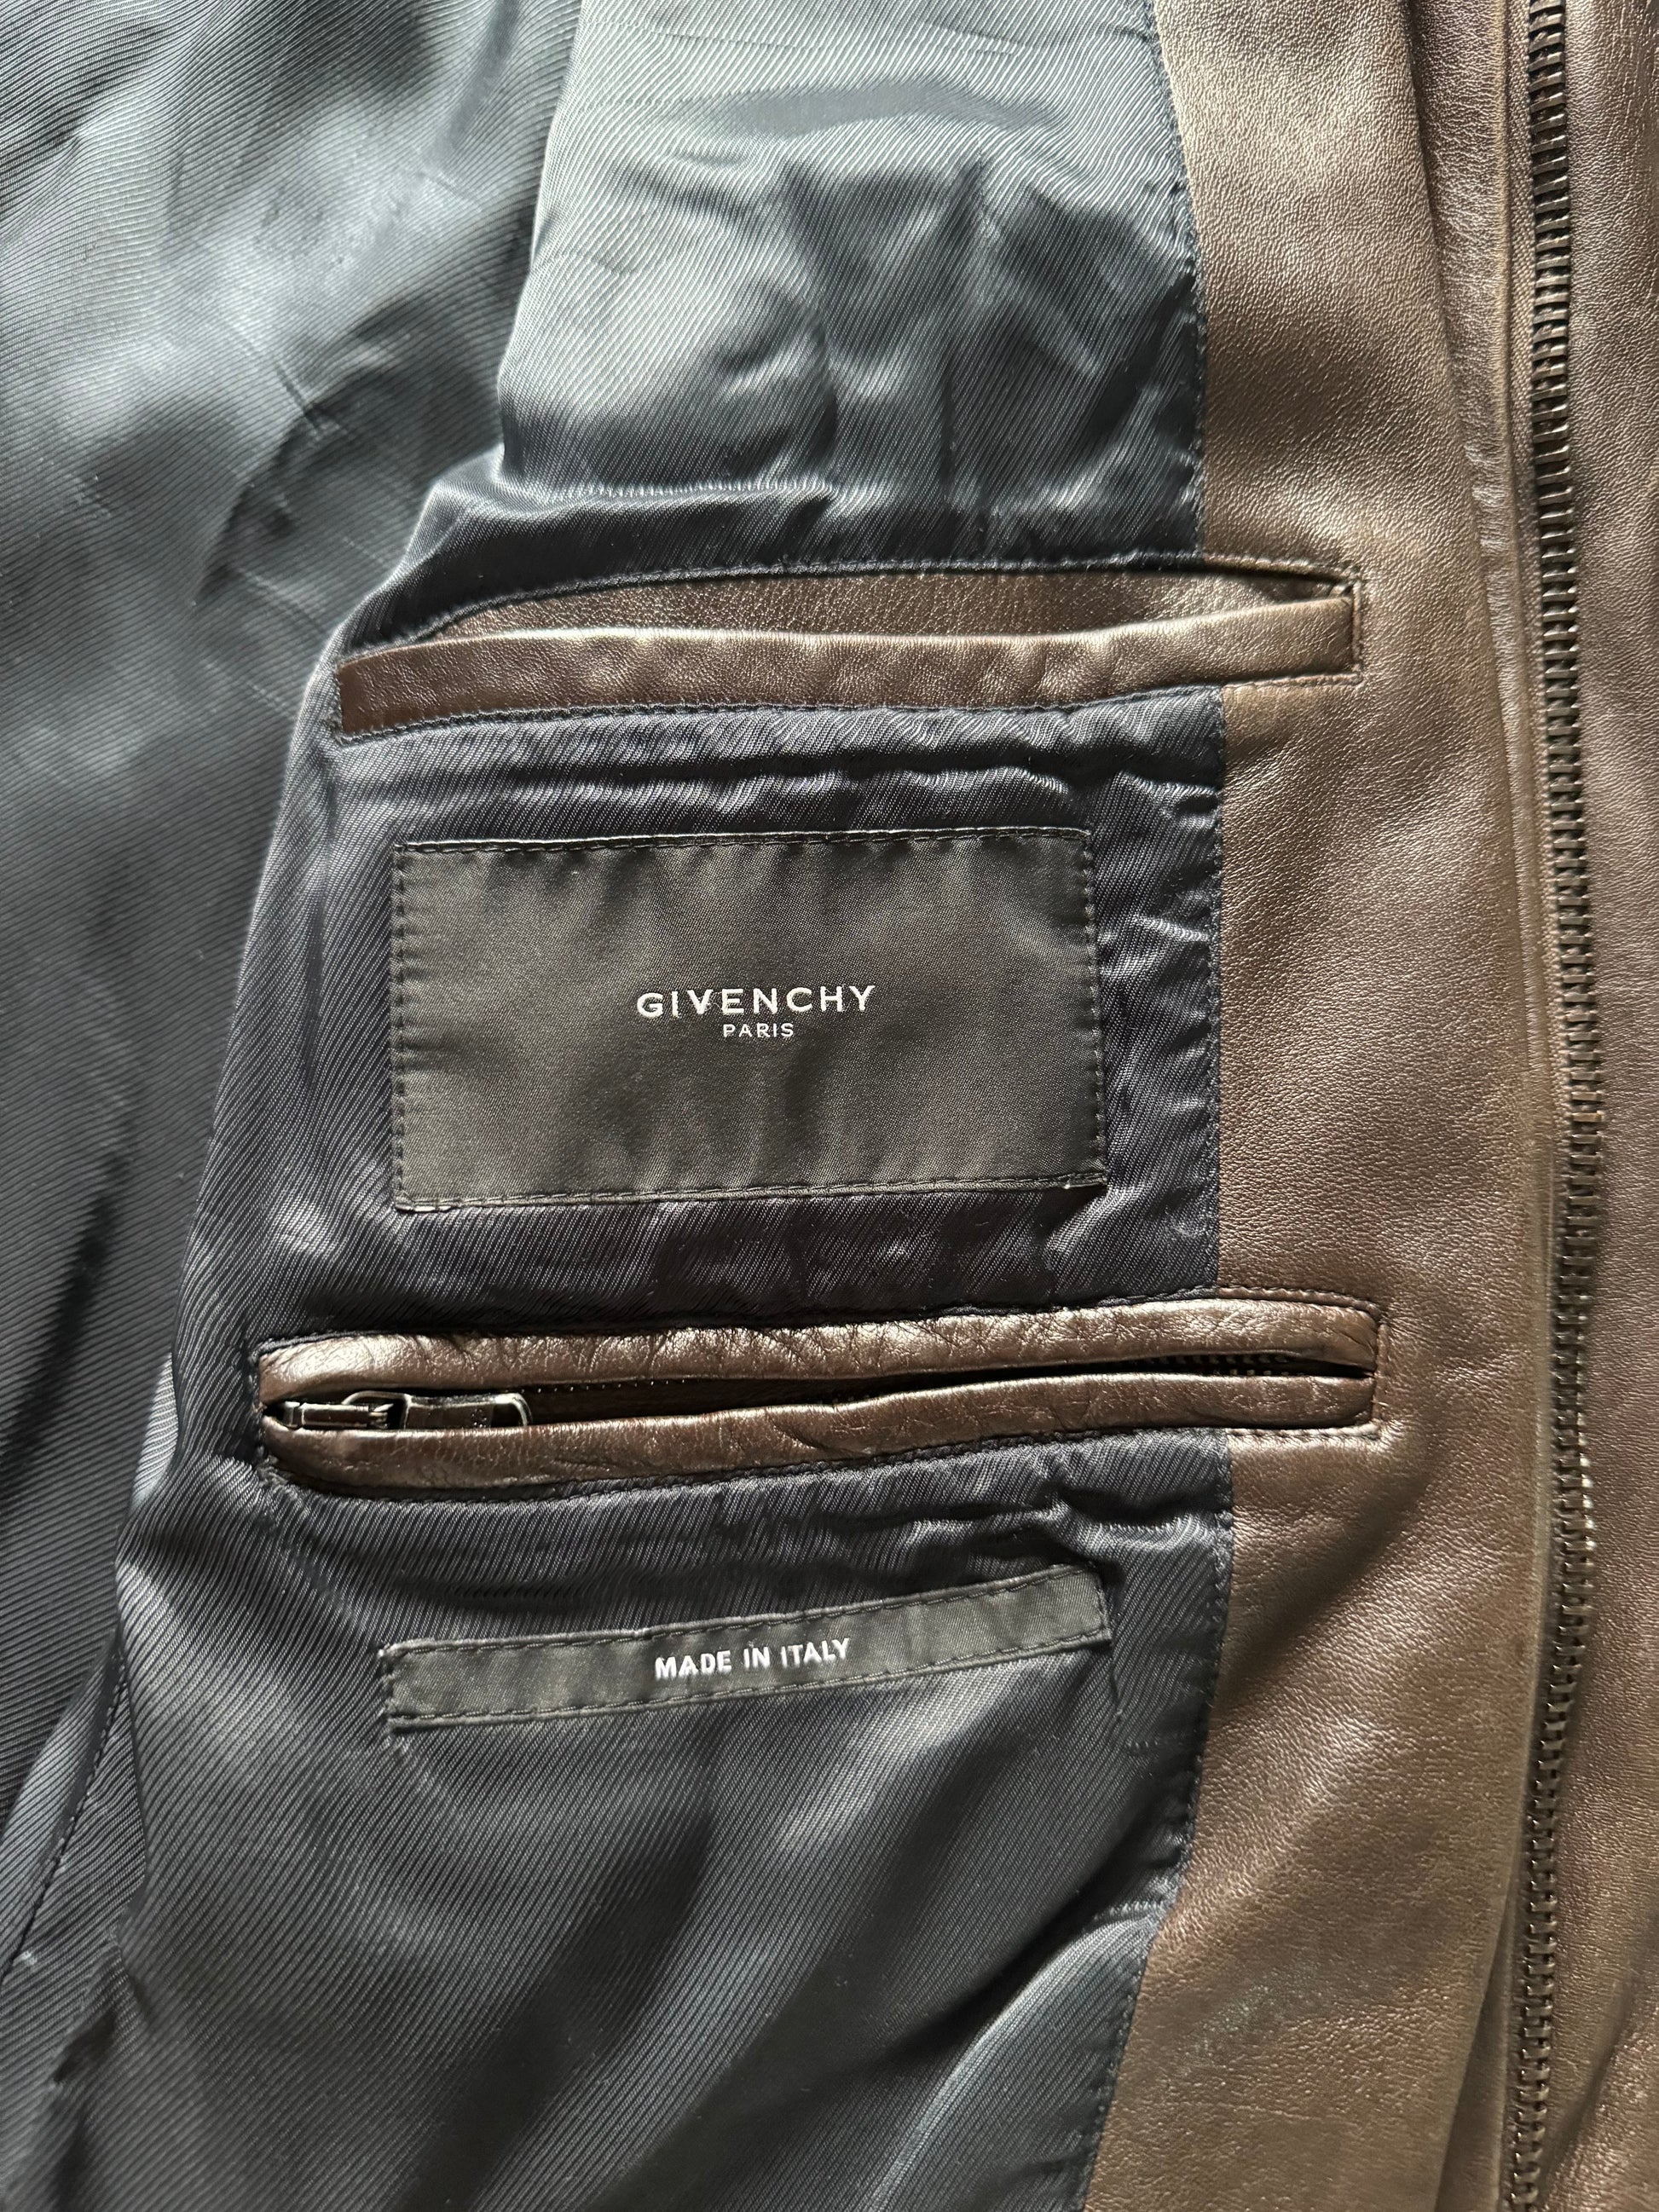 2000s Givenchy Light Leather Jacket by Ozwald Boateng (M) - 7